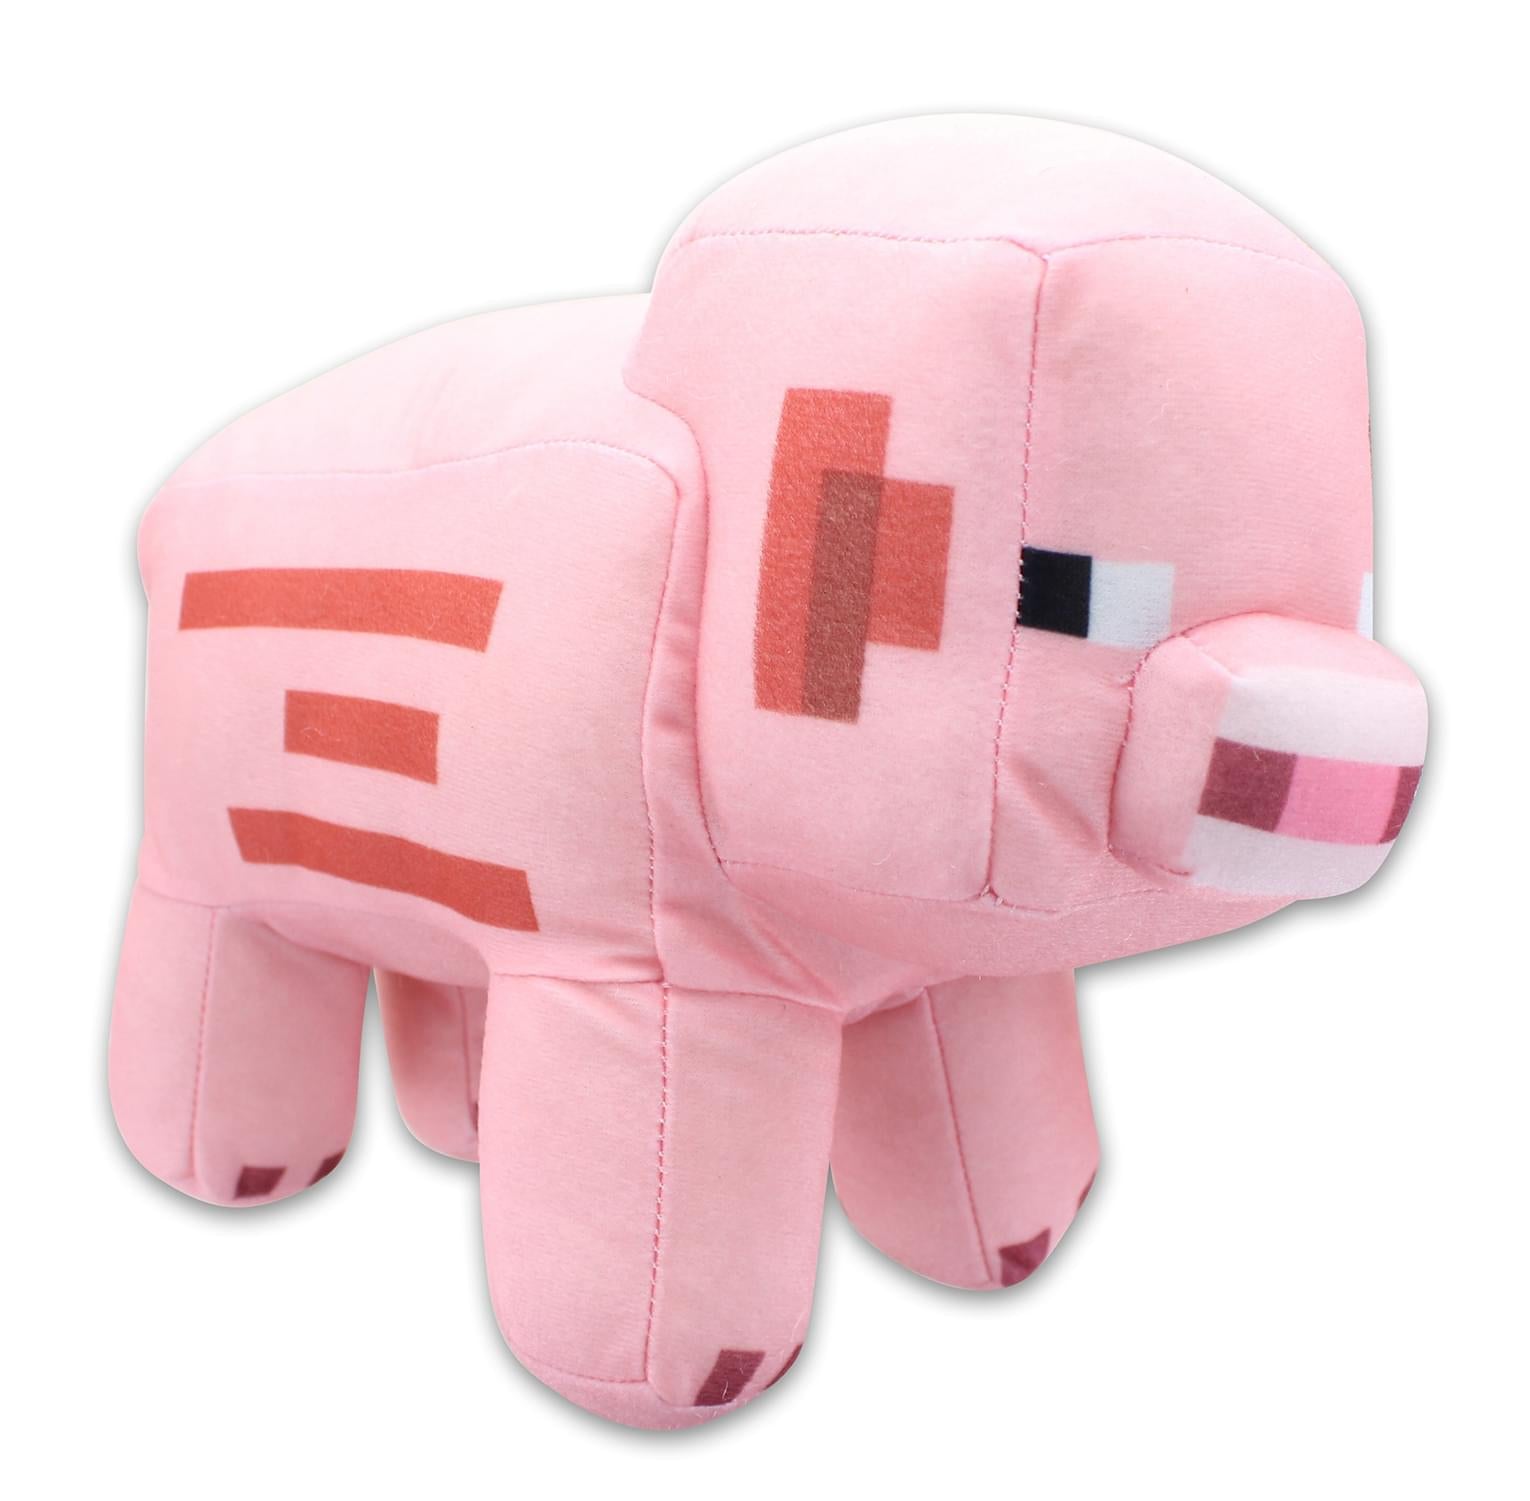 Minecraft 8 Inch Stuffed Character Plush | Pig